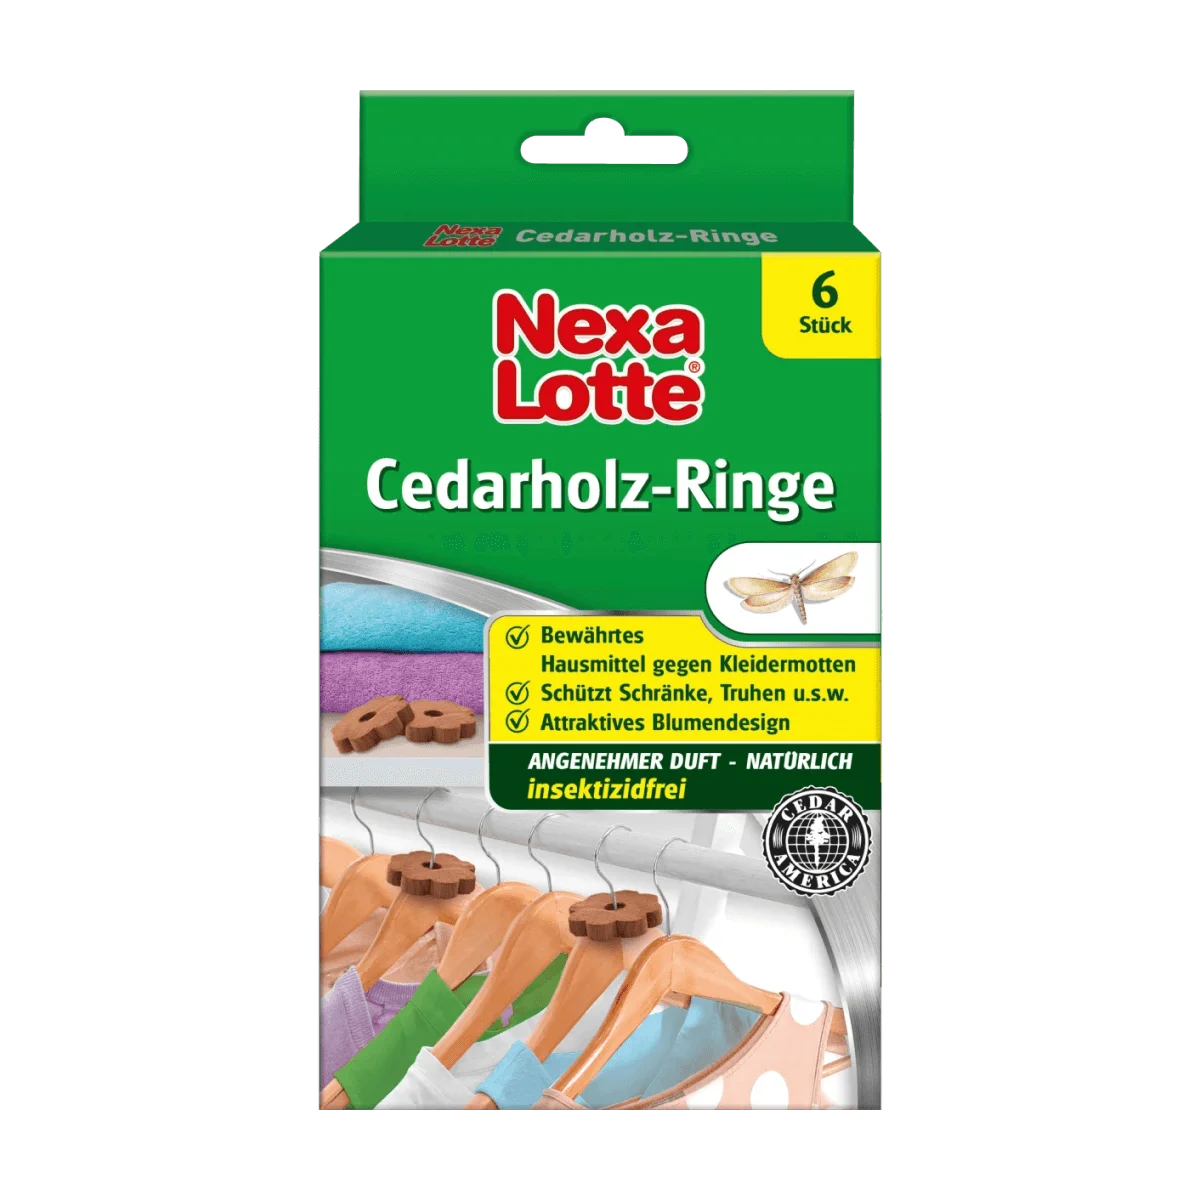 Nexa Lotte Cedarholz-Ringe gegen Kleidermotten, 6 Stk